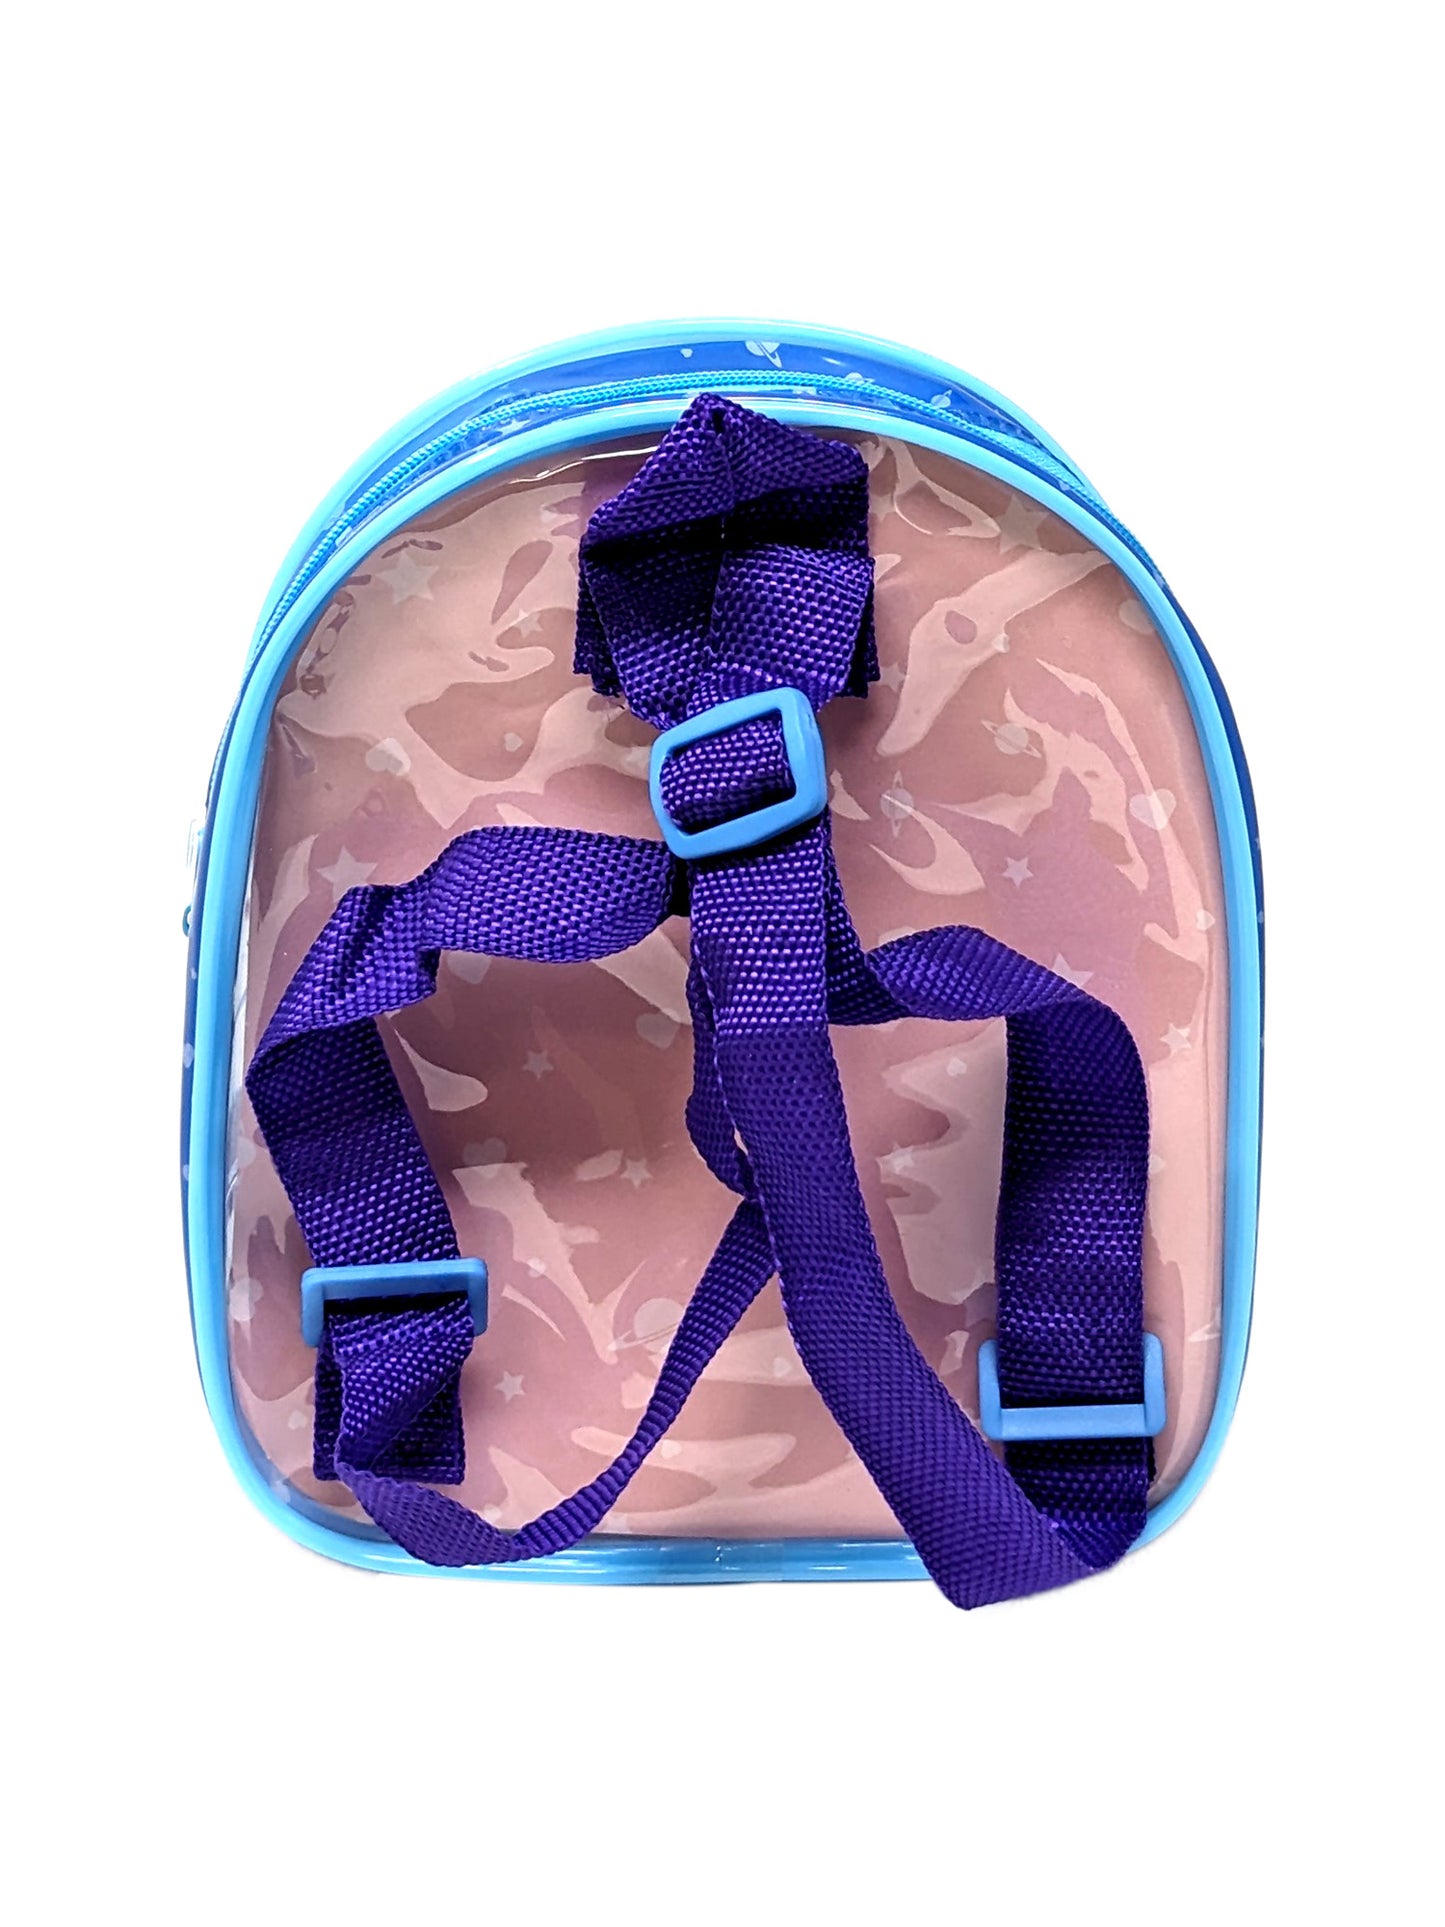 Stitch & Angel Hair Accessory Mini Backpack Girls Disney (10-Pcs)